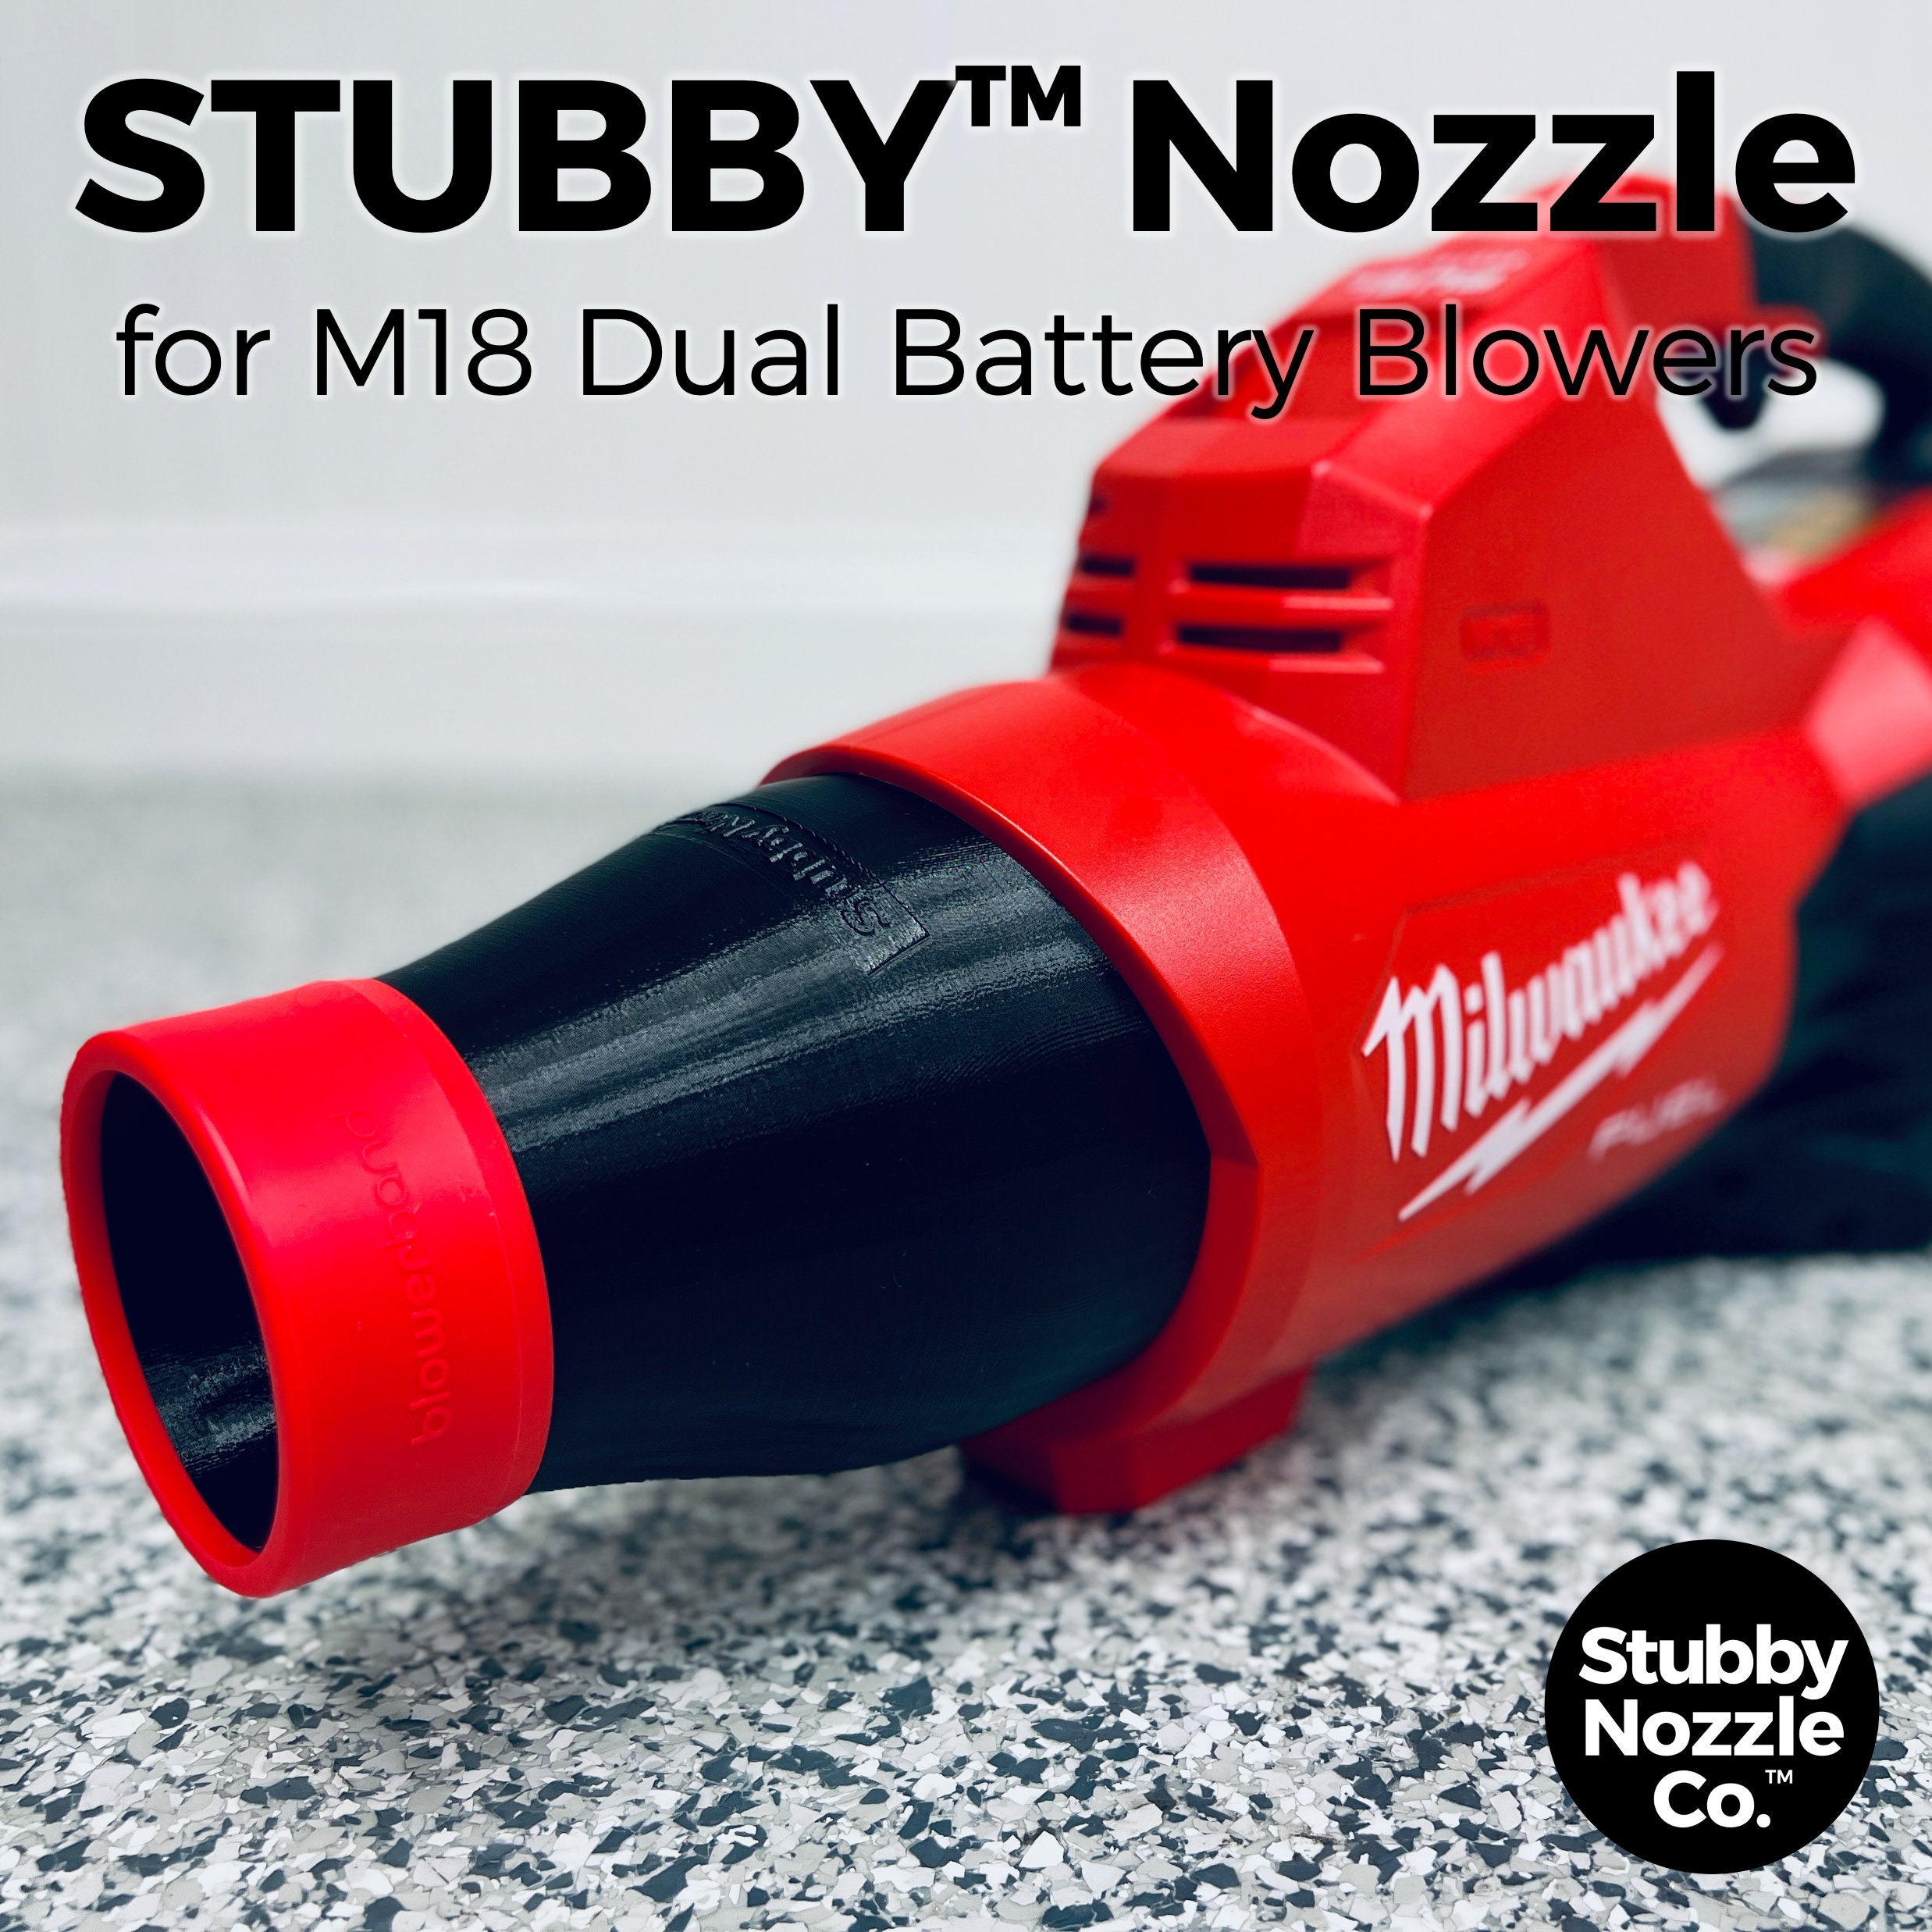 Stubby Nozzle Co. BucketCaddy - Standard - Detailed Image